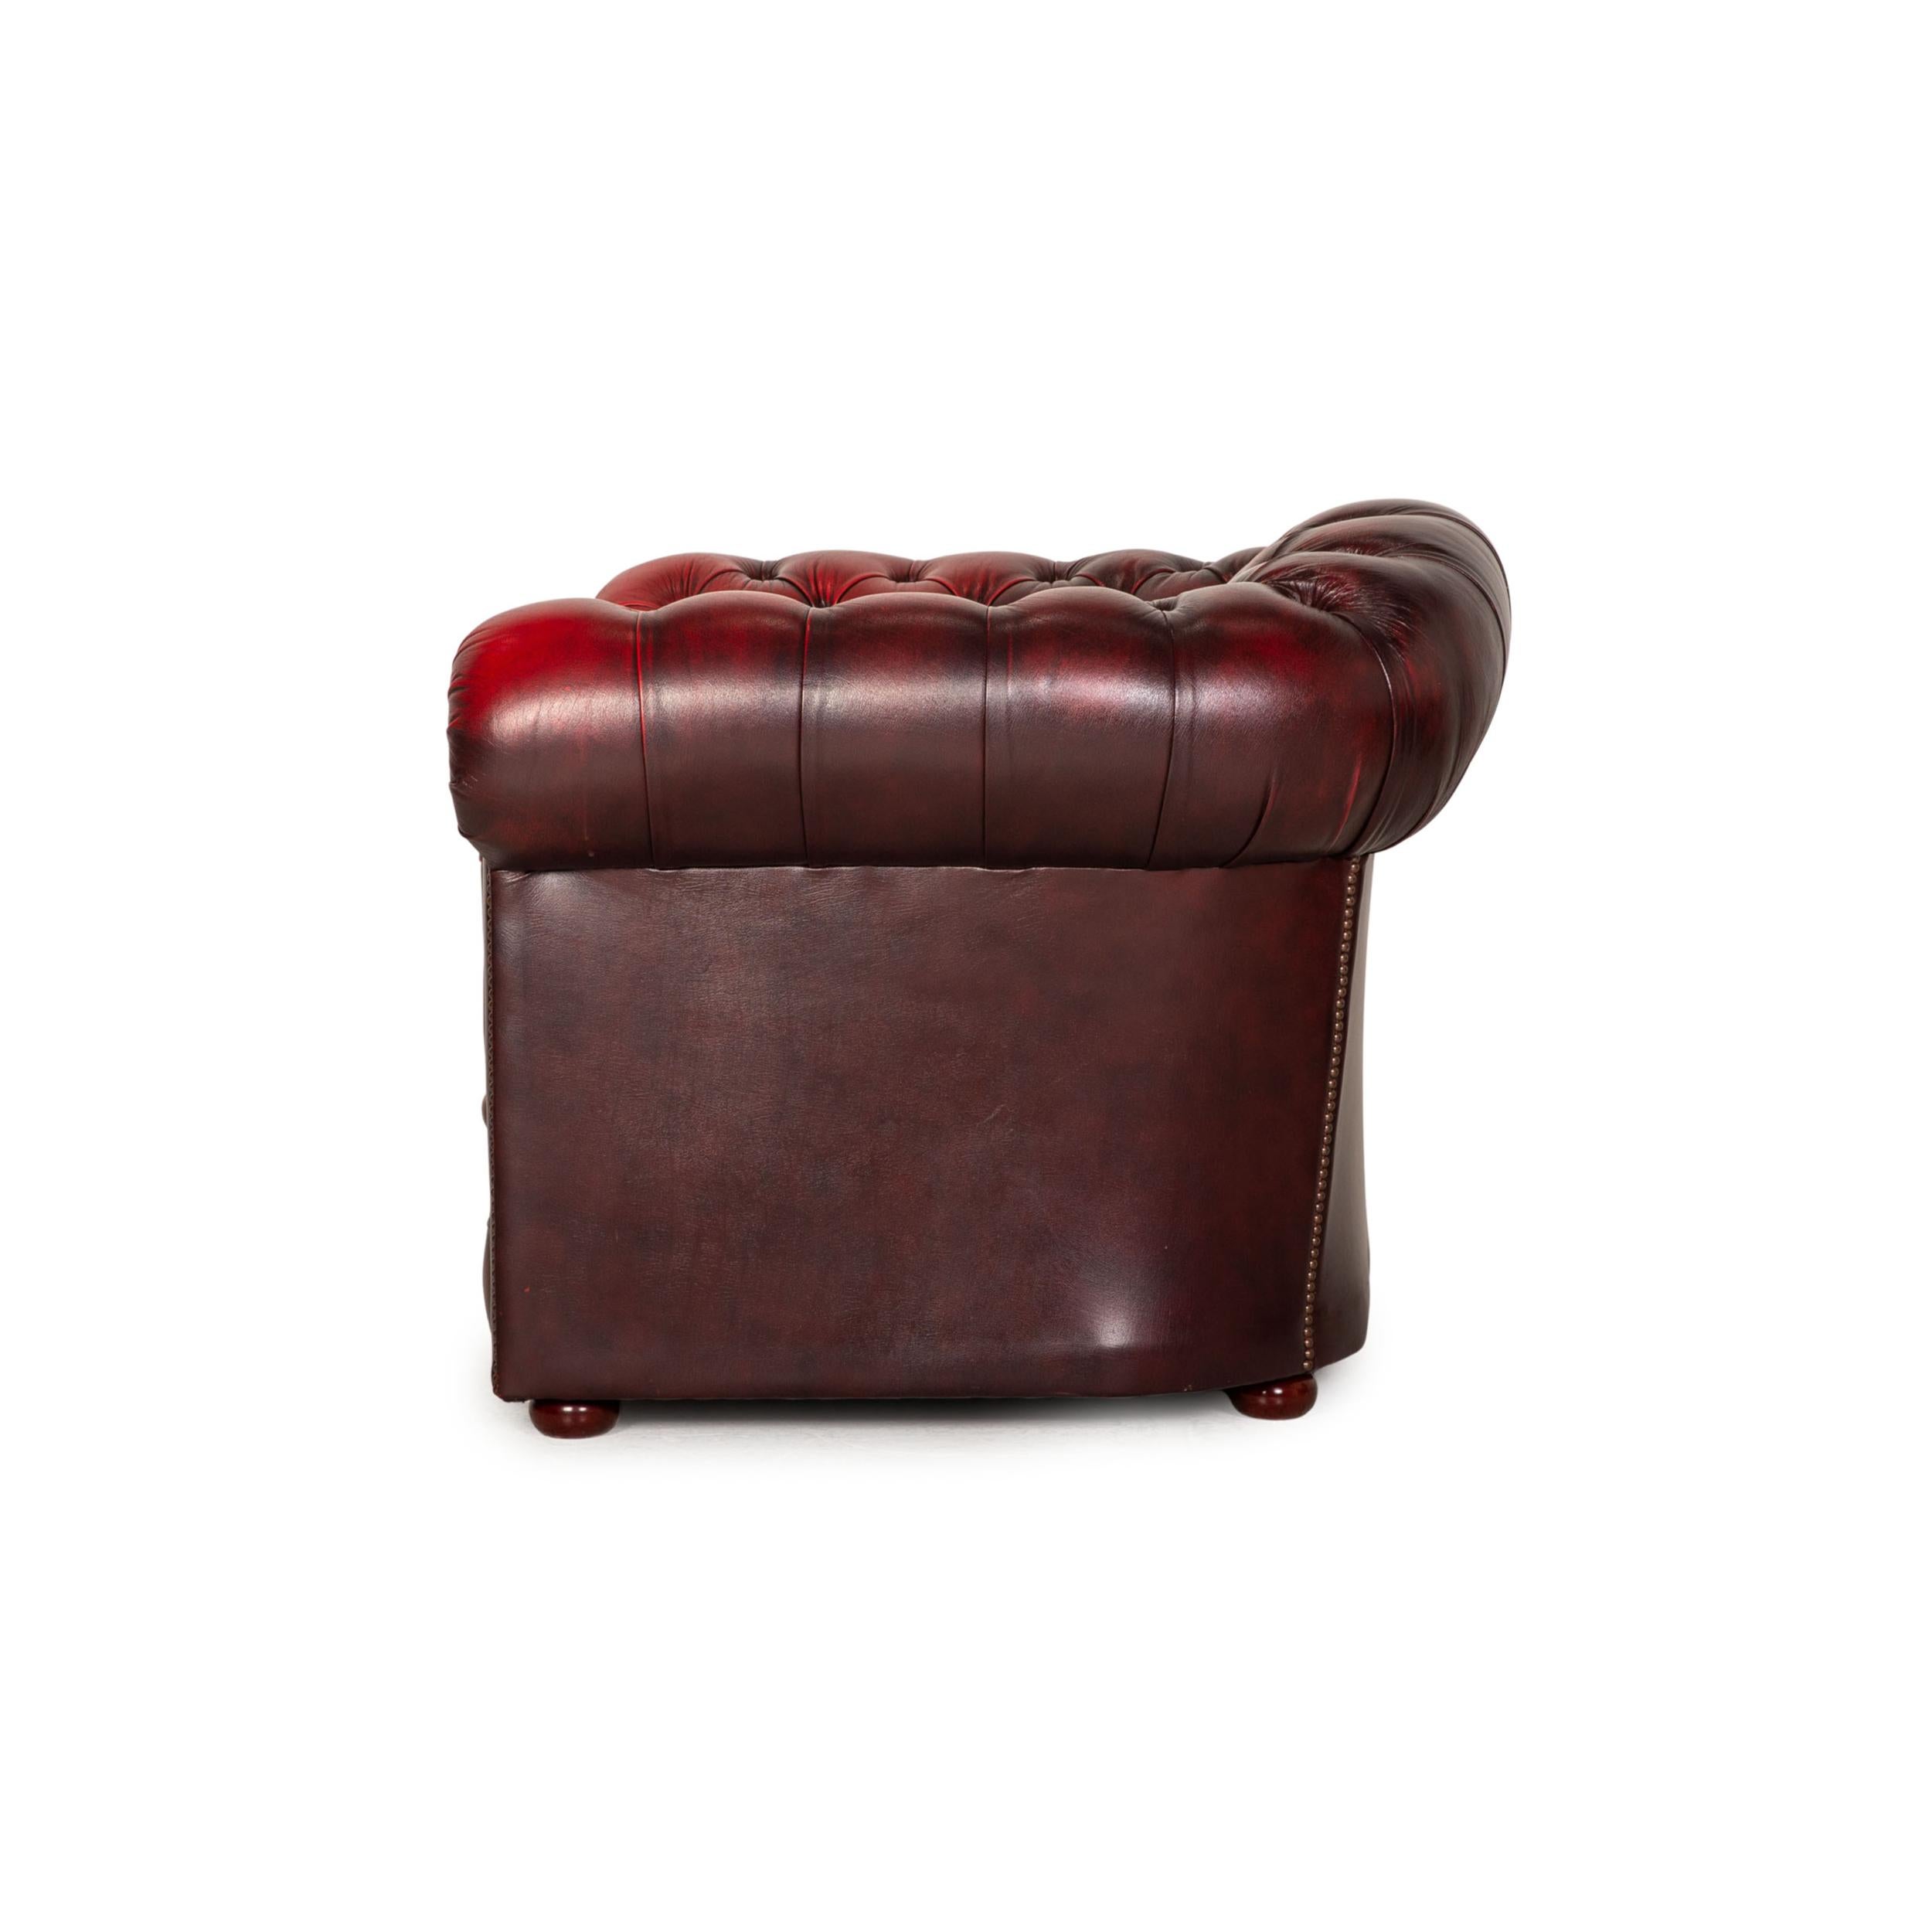 Contemporary Chesterfield Tudor Leather Armchair Dark Red